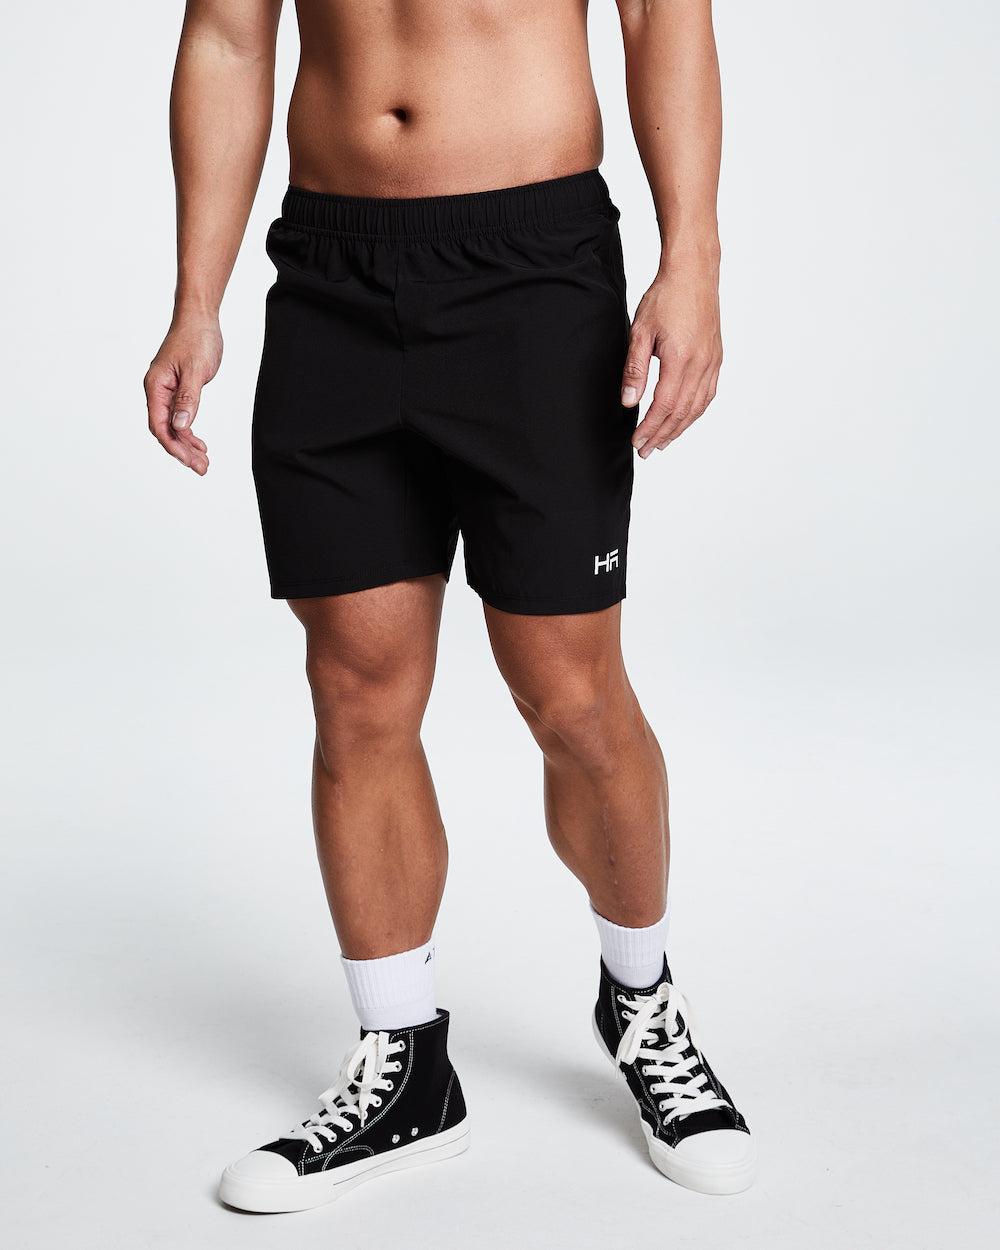 Aro 7" Gym Shorts - Black